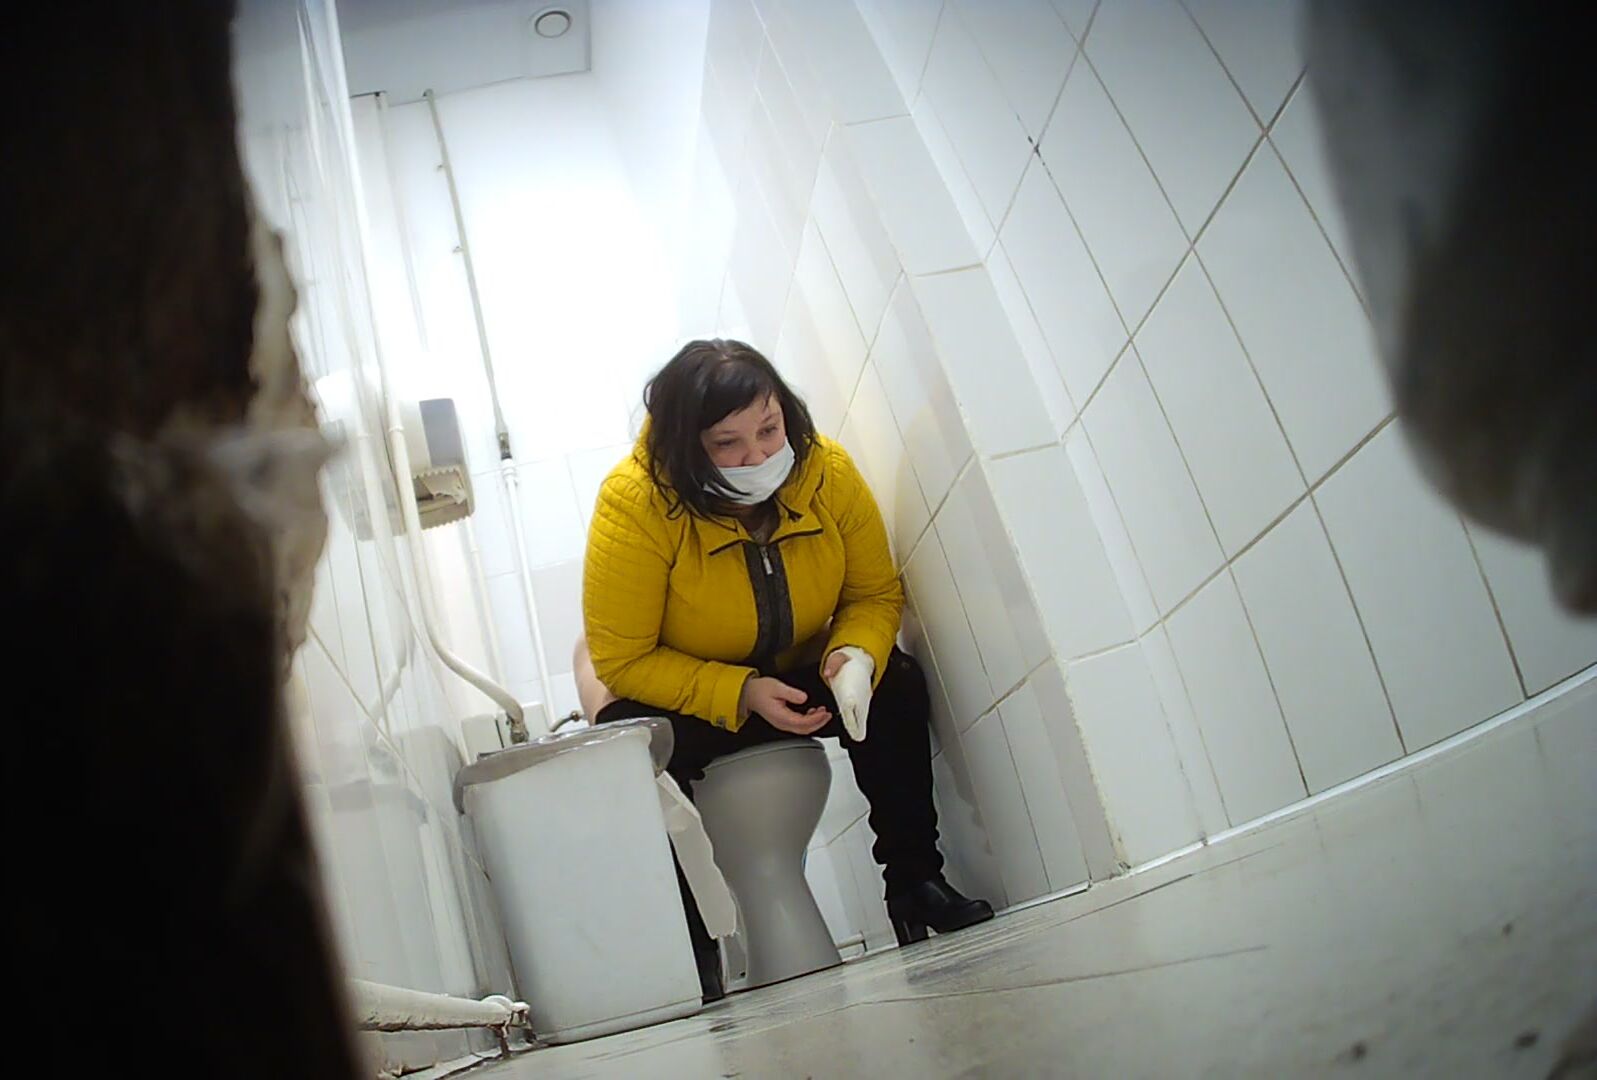 Italian toilet voyeur